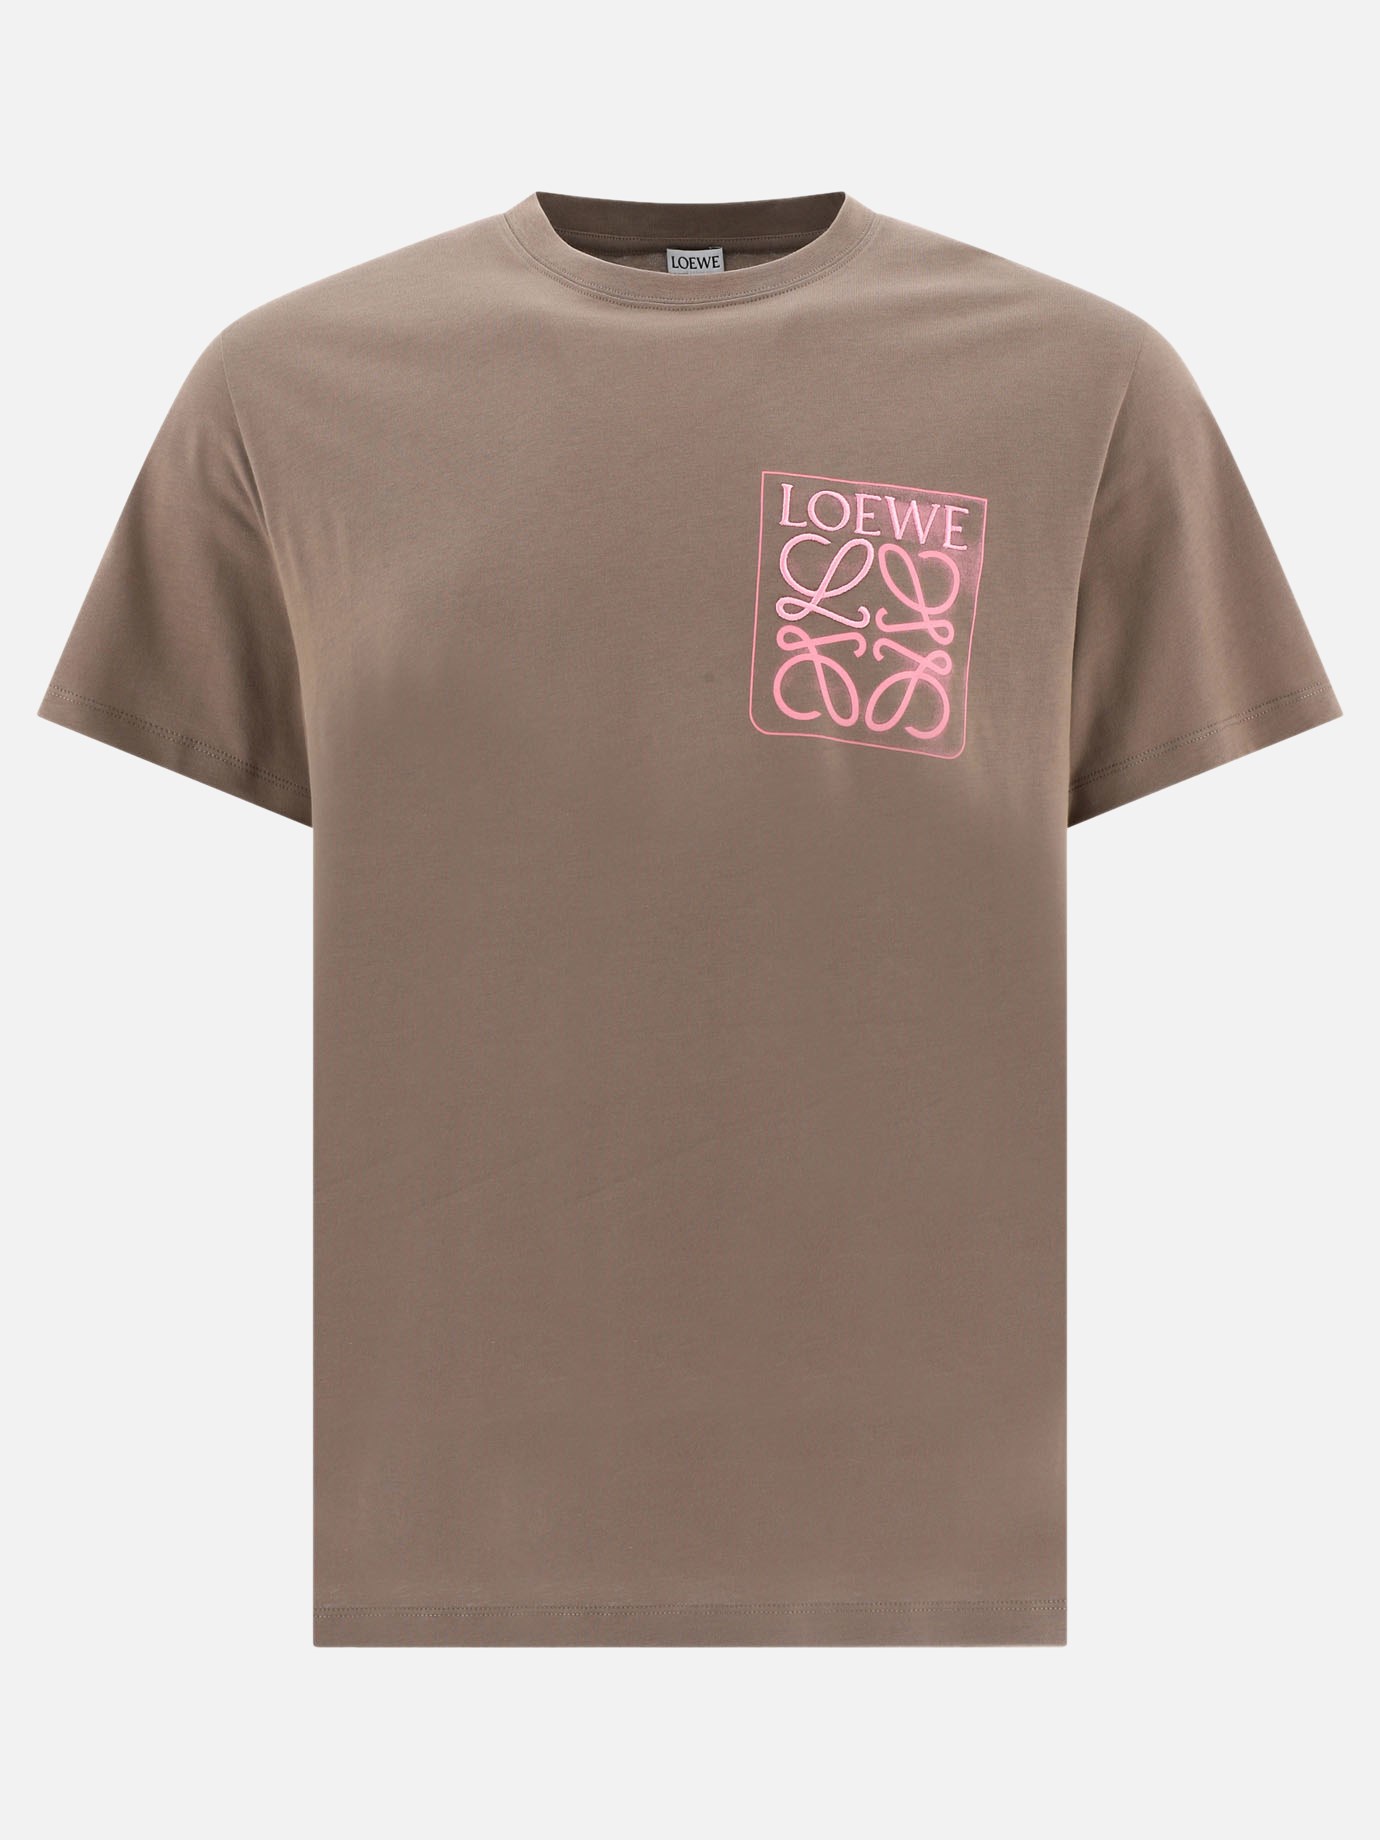  Anagram  t-shirtby Loewe - 1